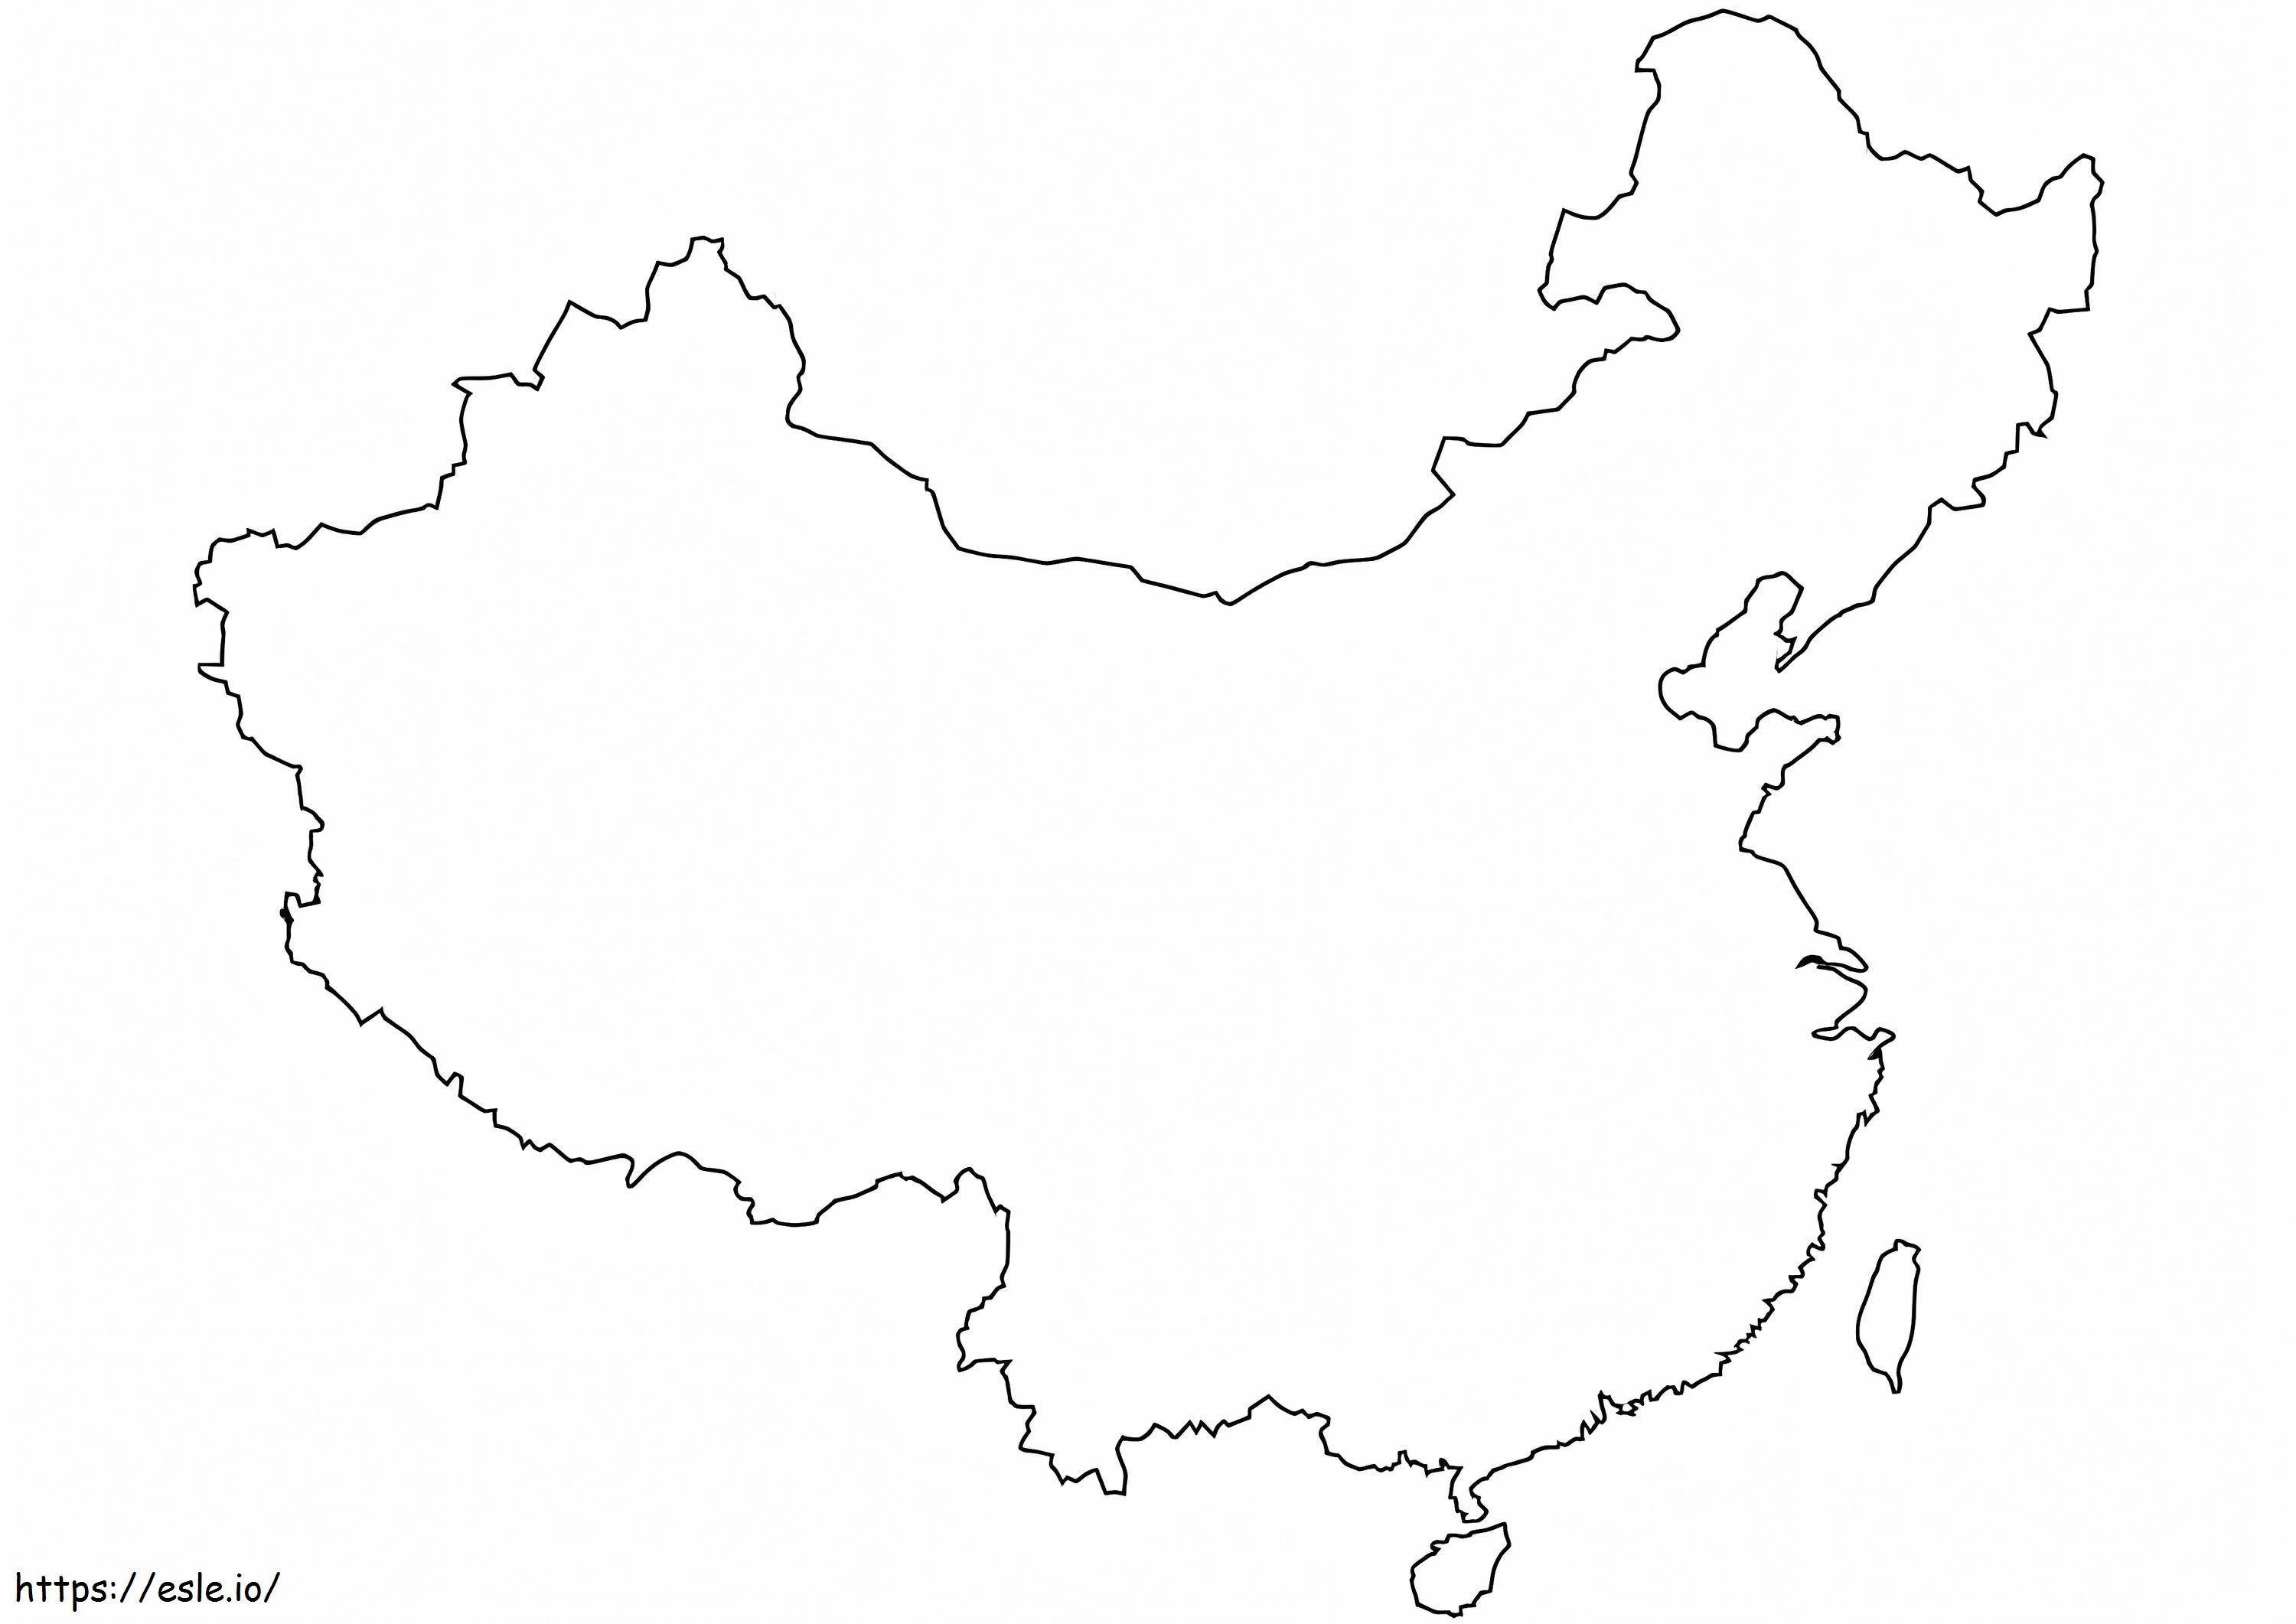 Pusta mapa konturowa Chin kolorowanka